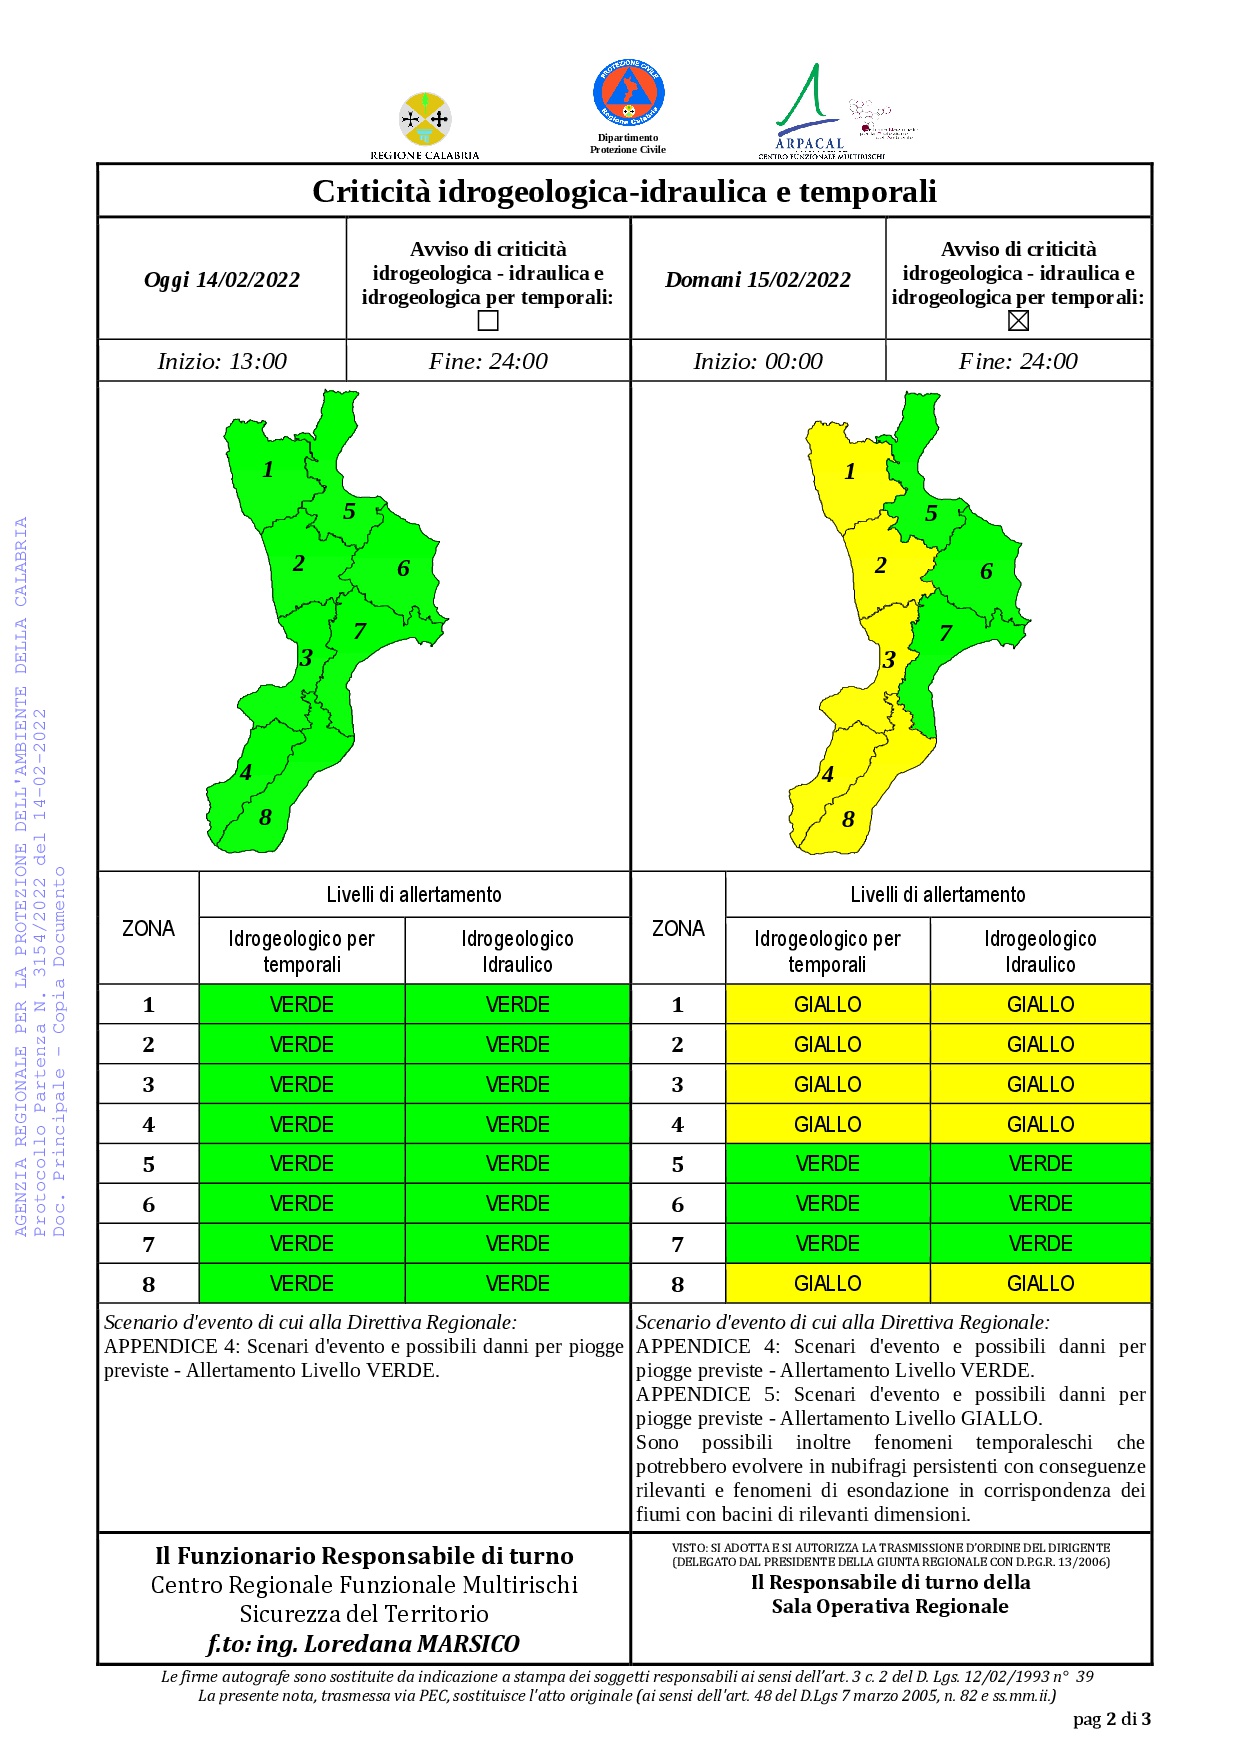 Criticità idrogeologica-idraulica e temporali in Calabria 14-02-2022